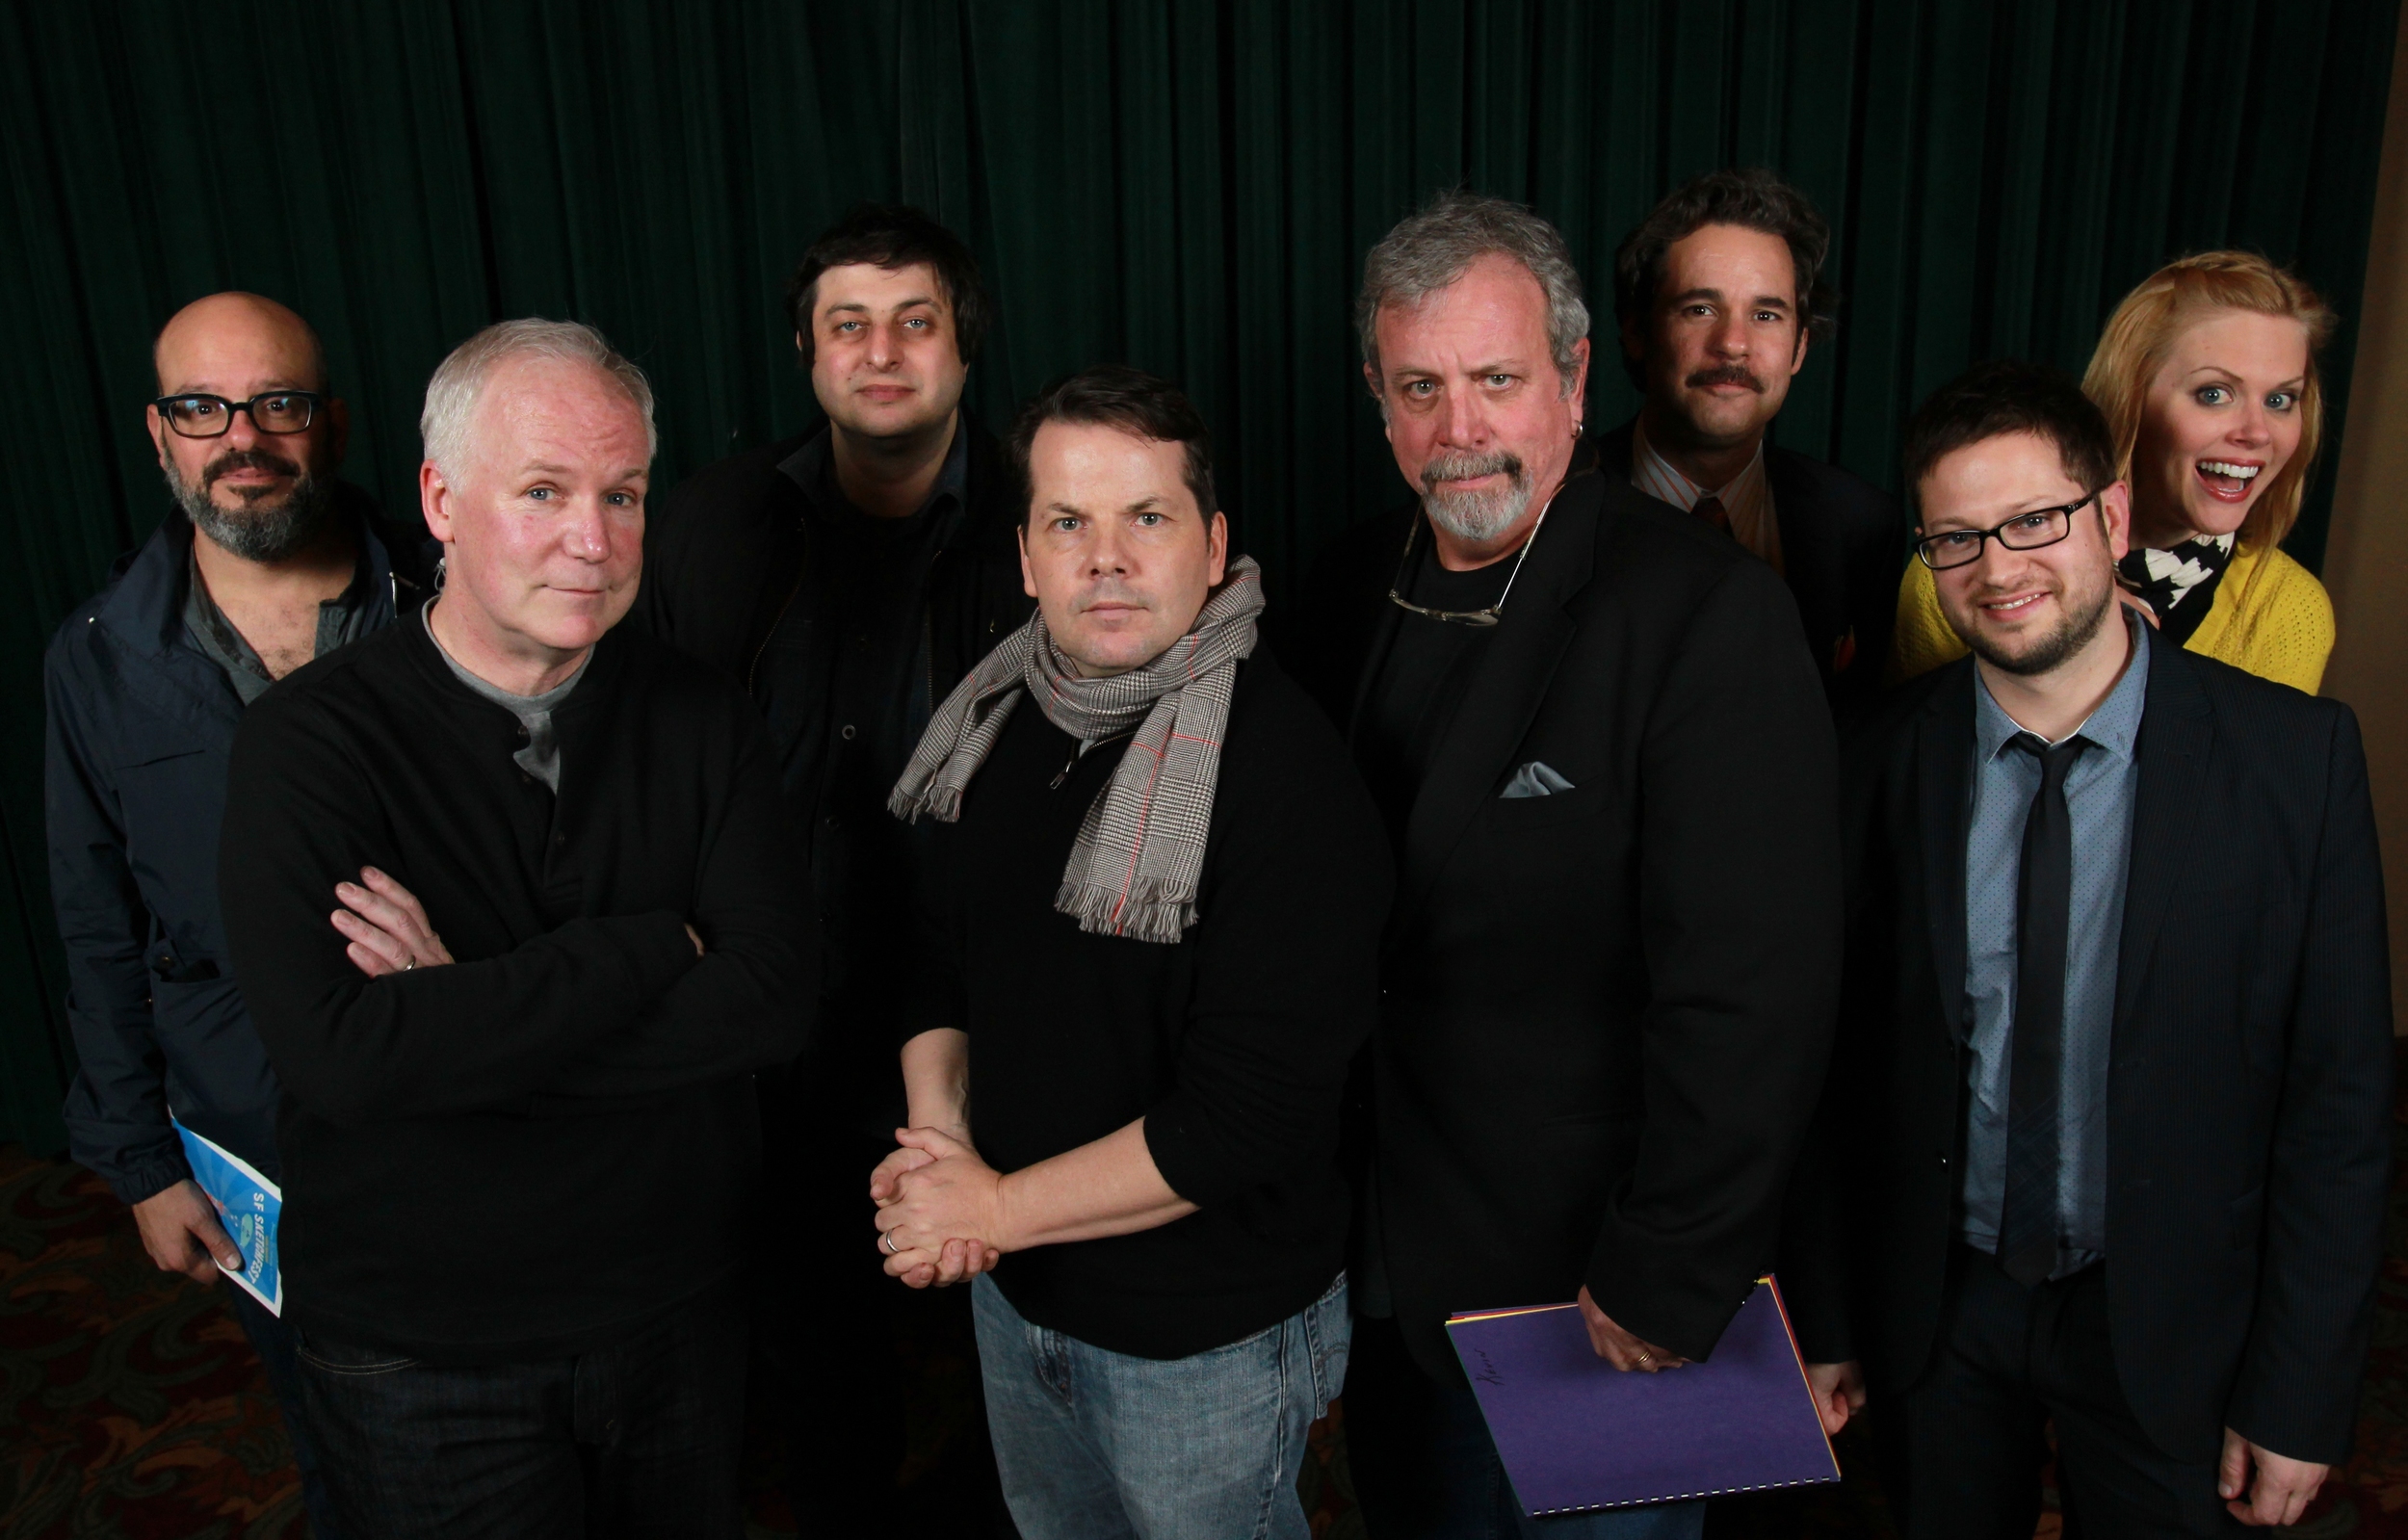 David Cross, Bill Corbett, Eugene Mirman, Bruce McCulloch, Kevin Murphy, Paul F. Tompkins and Janet Varney. Photo by Jakub Mosur.